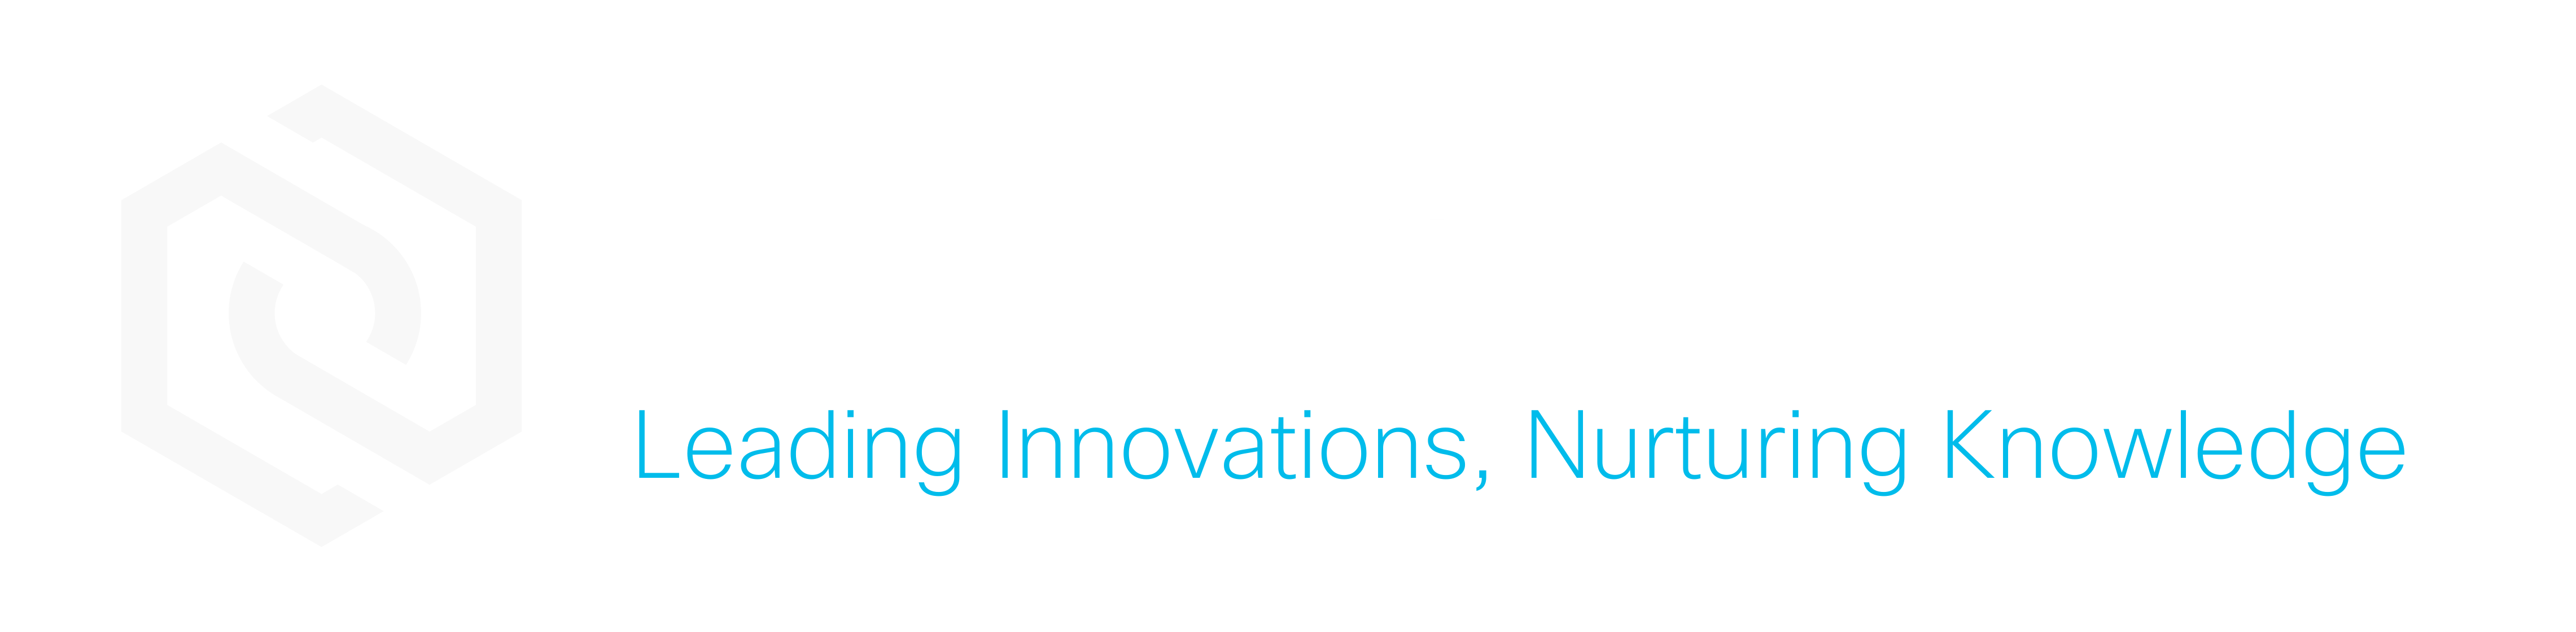 GM LINK: Leading Innovations, Nurturing Knowledge